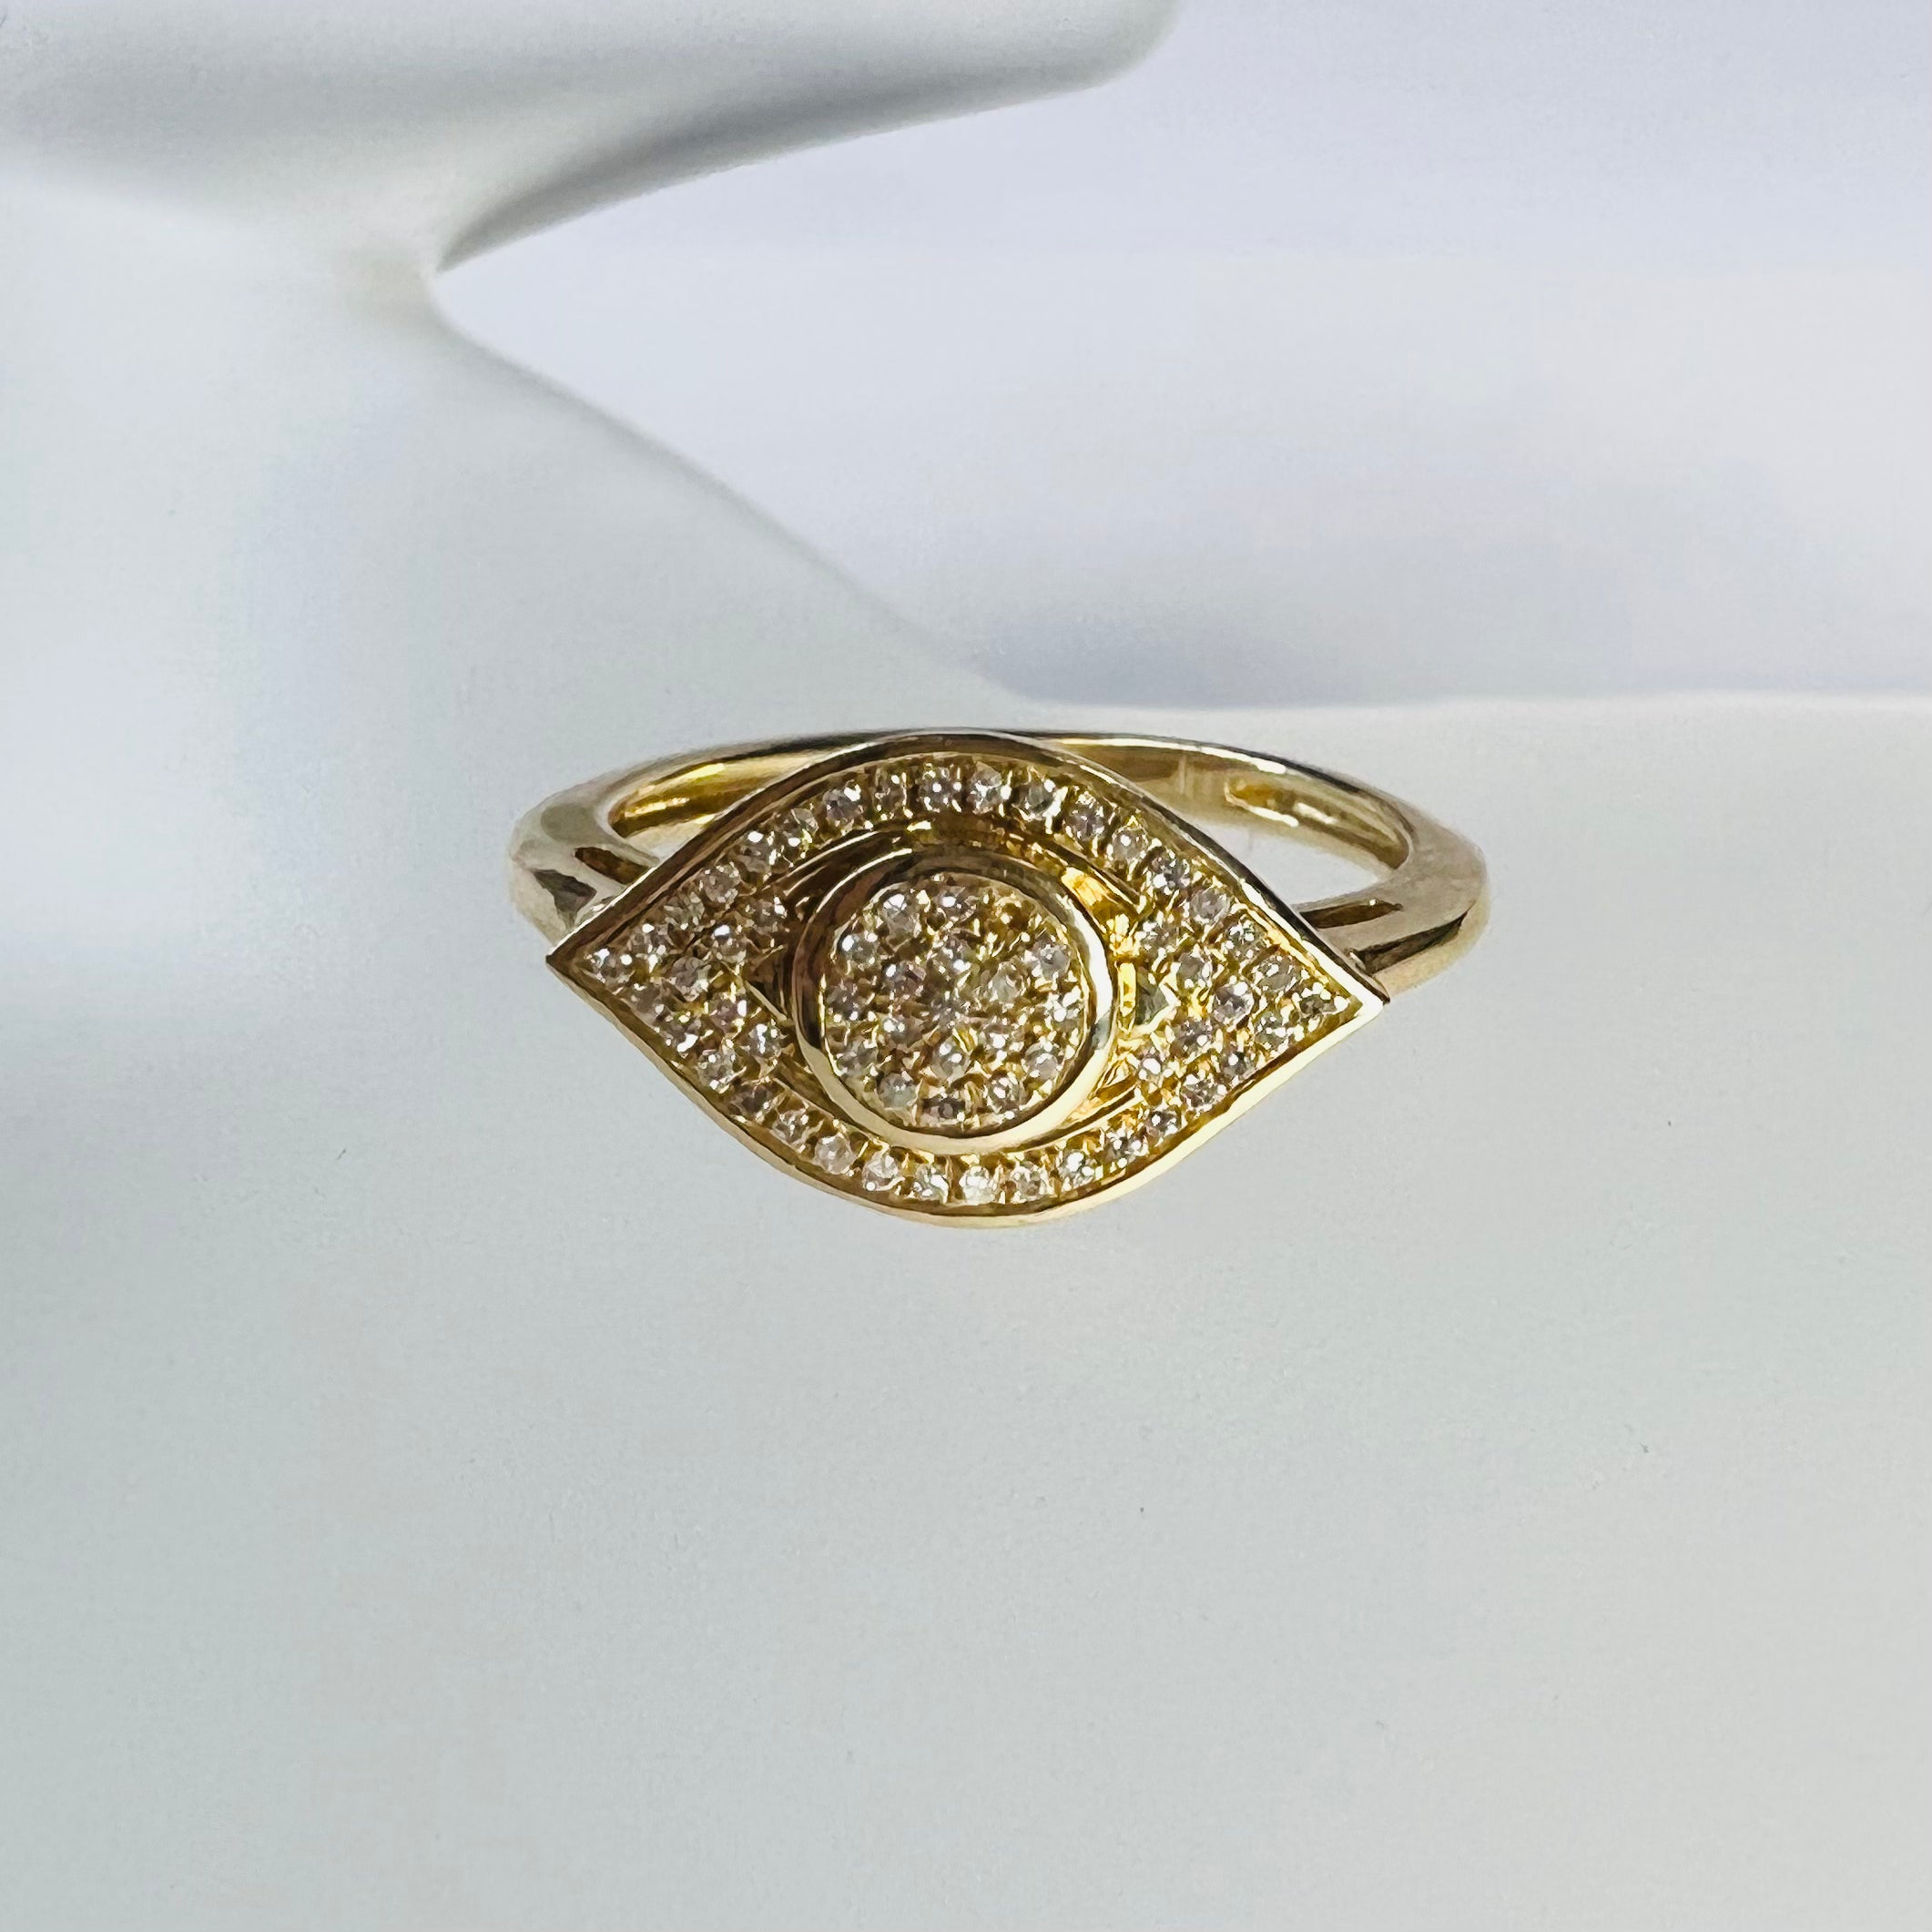 Solid 14K Yellow Gold Evil Eye Pave set Diamond Ring Band Size 5.25